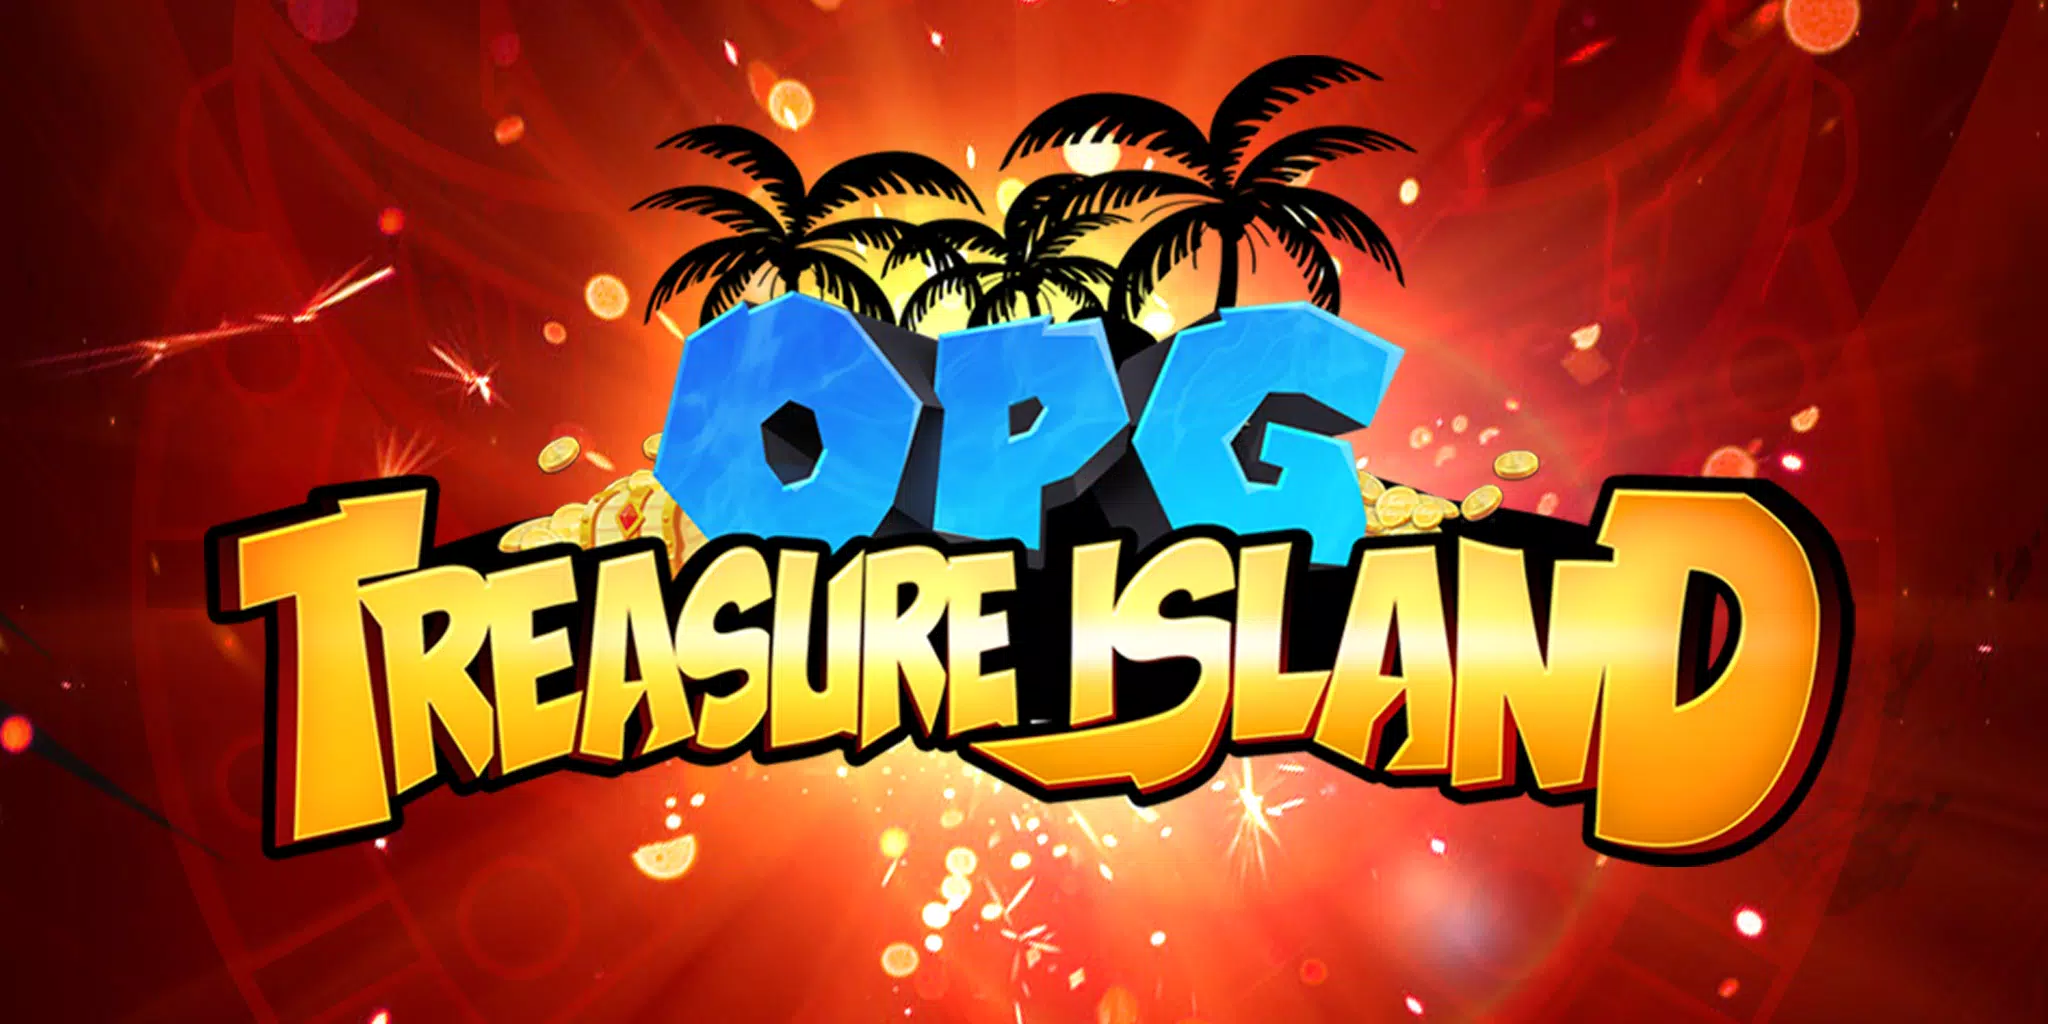 OPG: Treasure Island Mobile